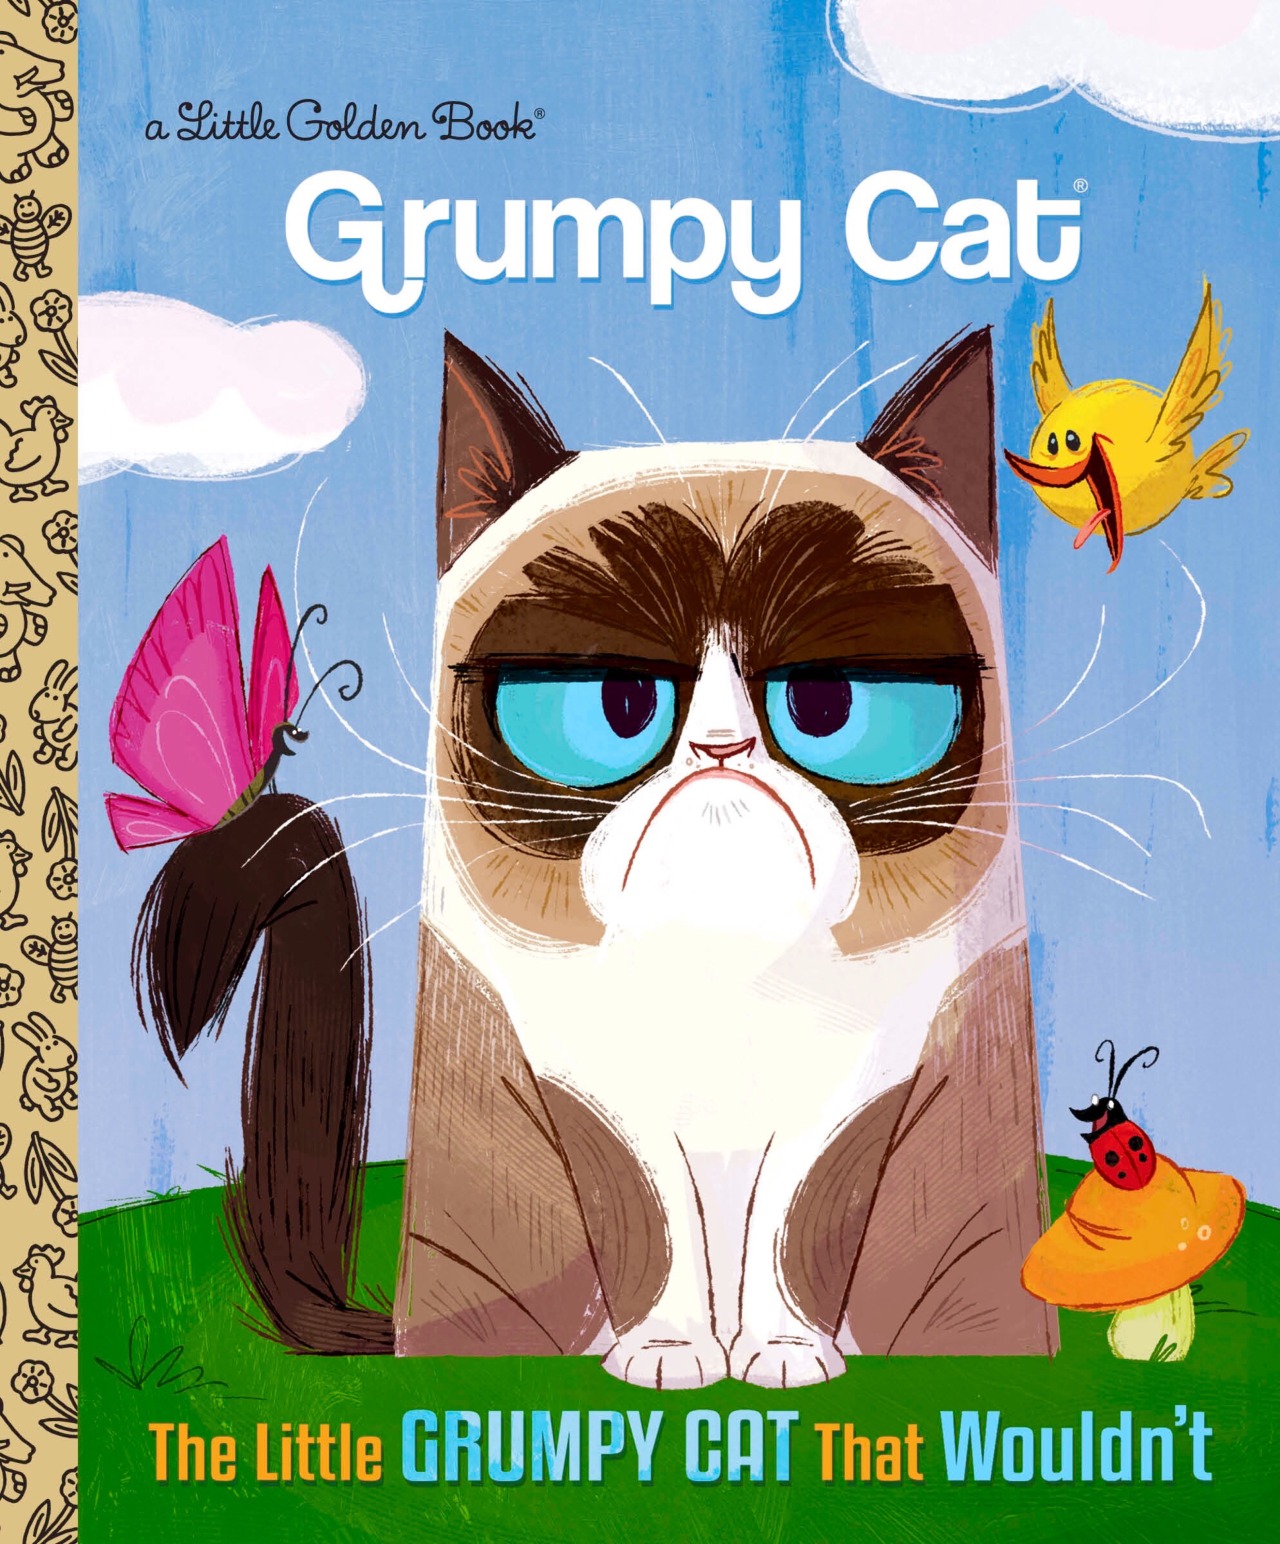 Bad News: Grumpy Cat Golden Books coming in 2016!...